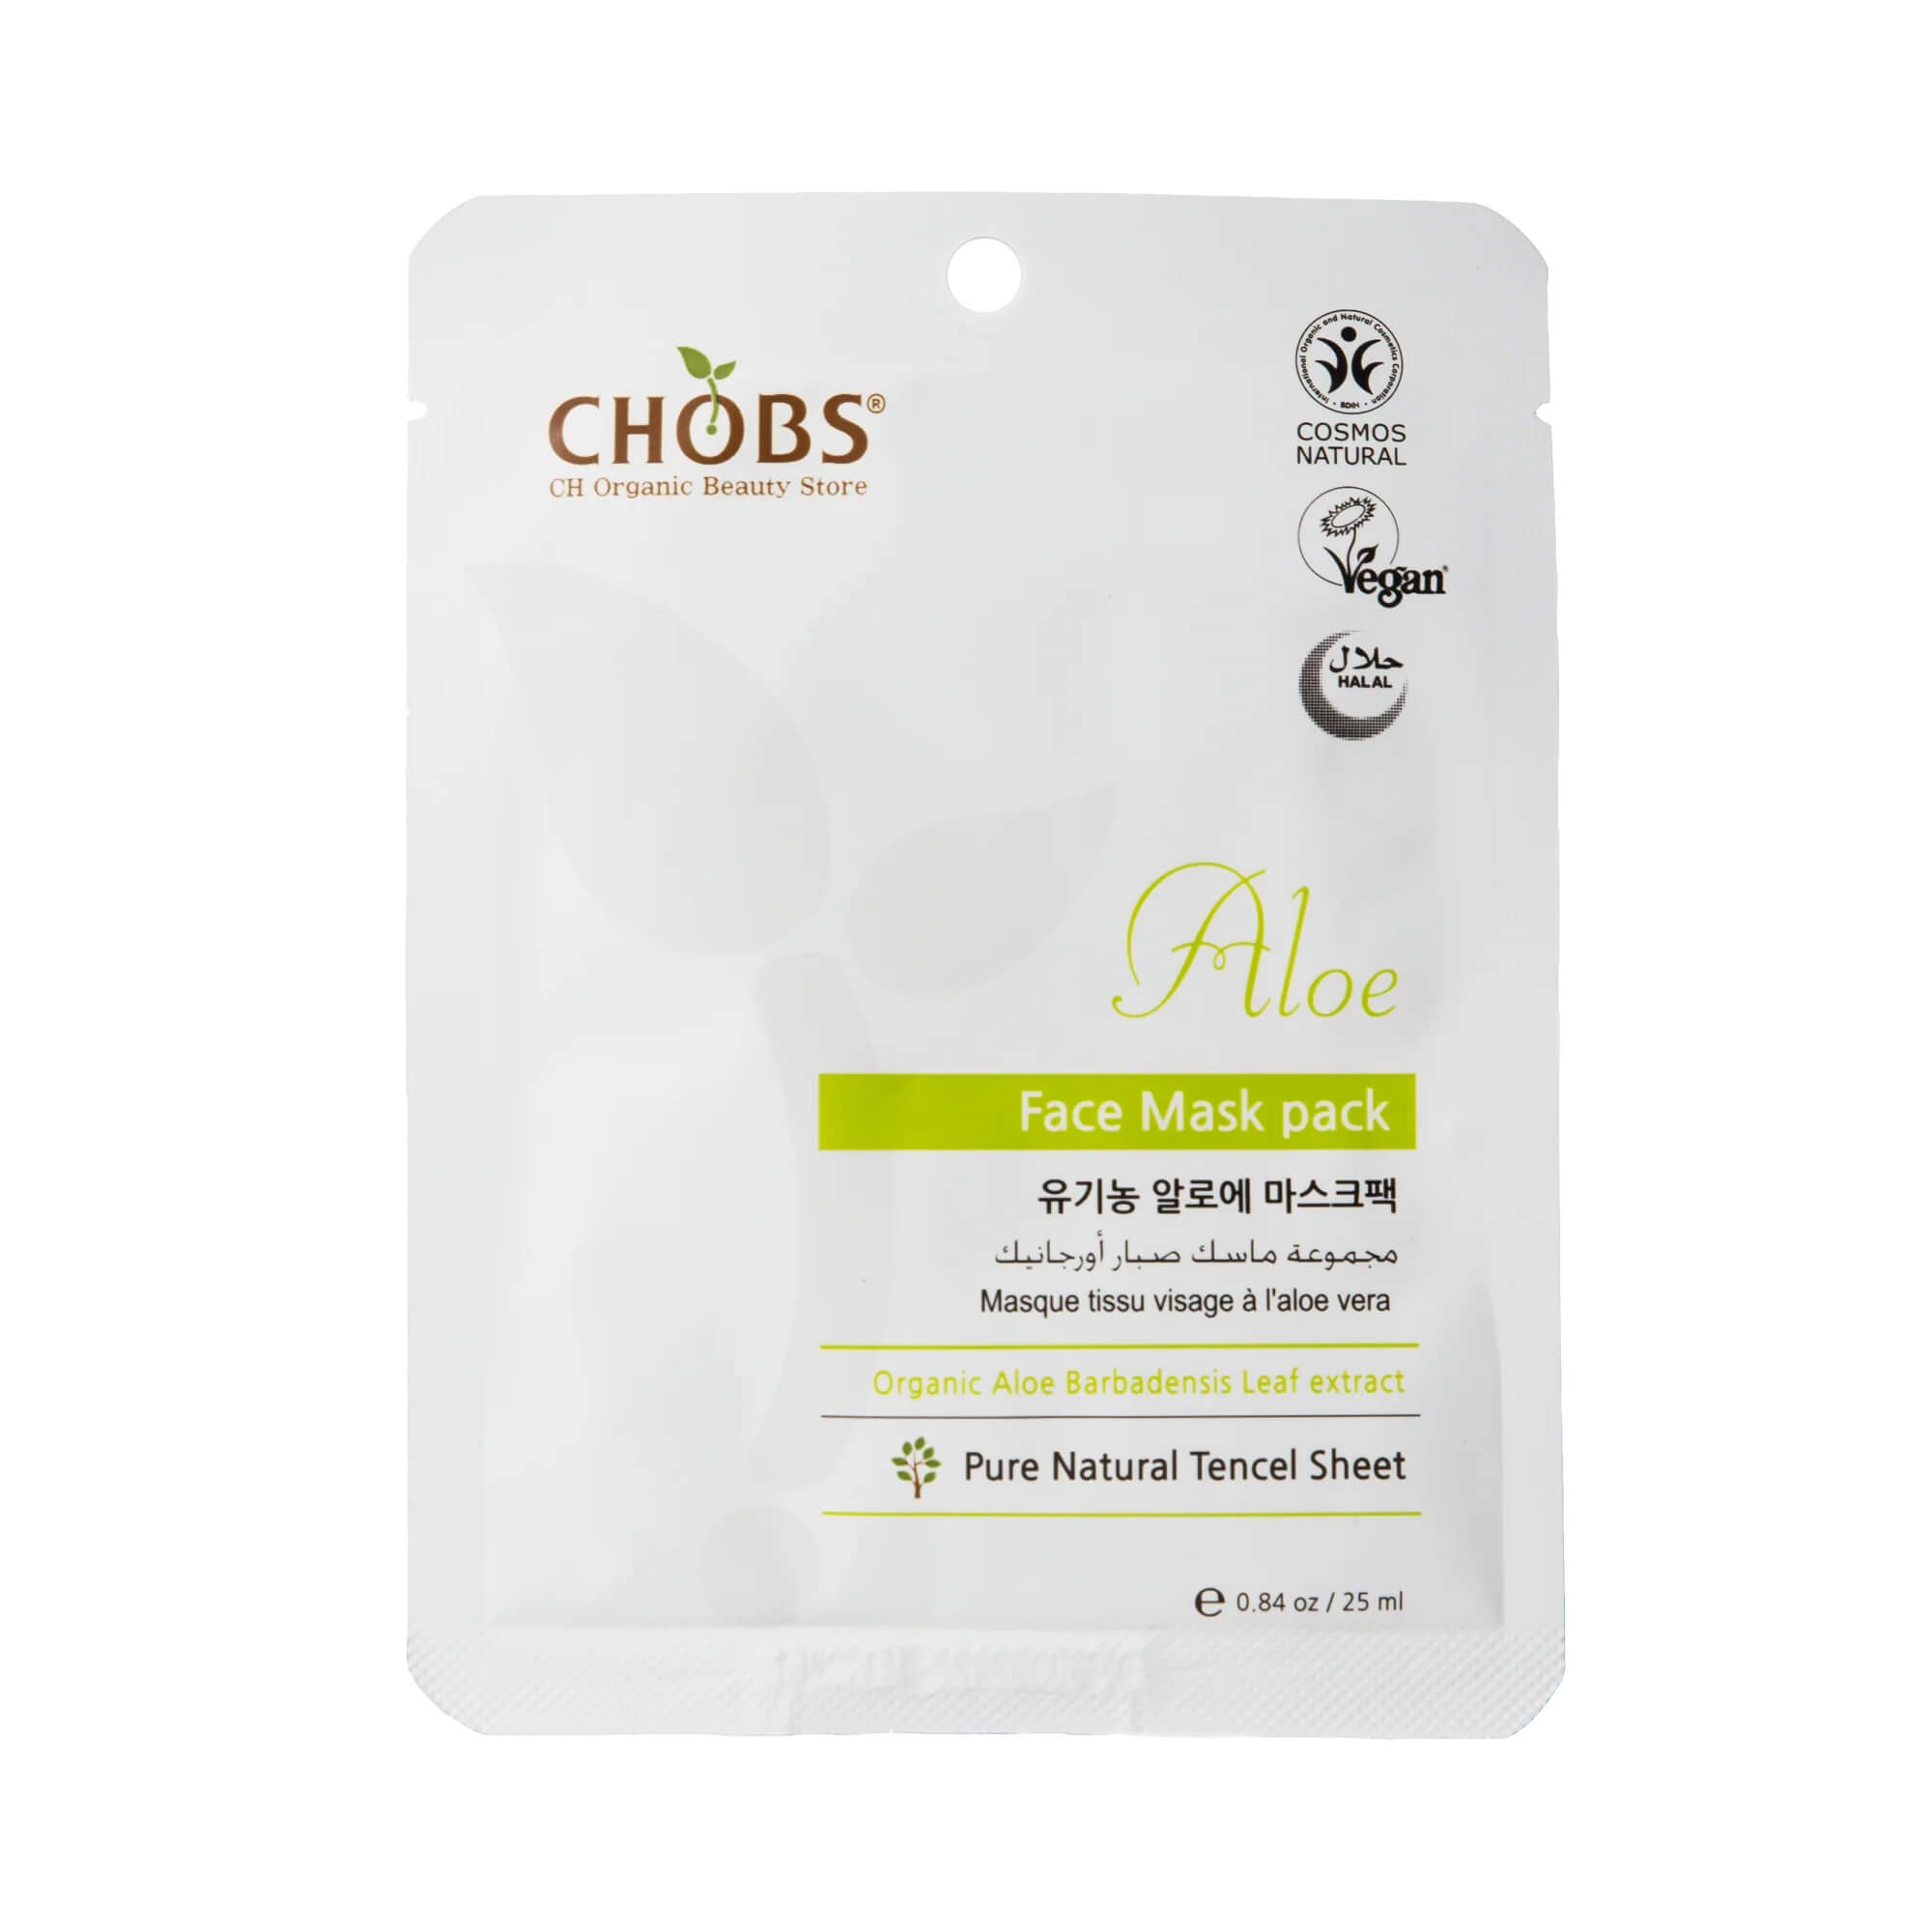 Chobs Aloe Mask Pack 25 g